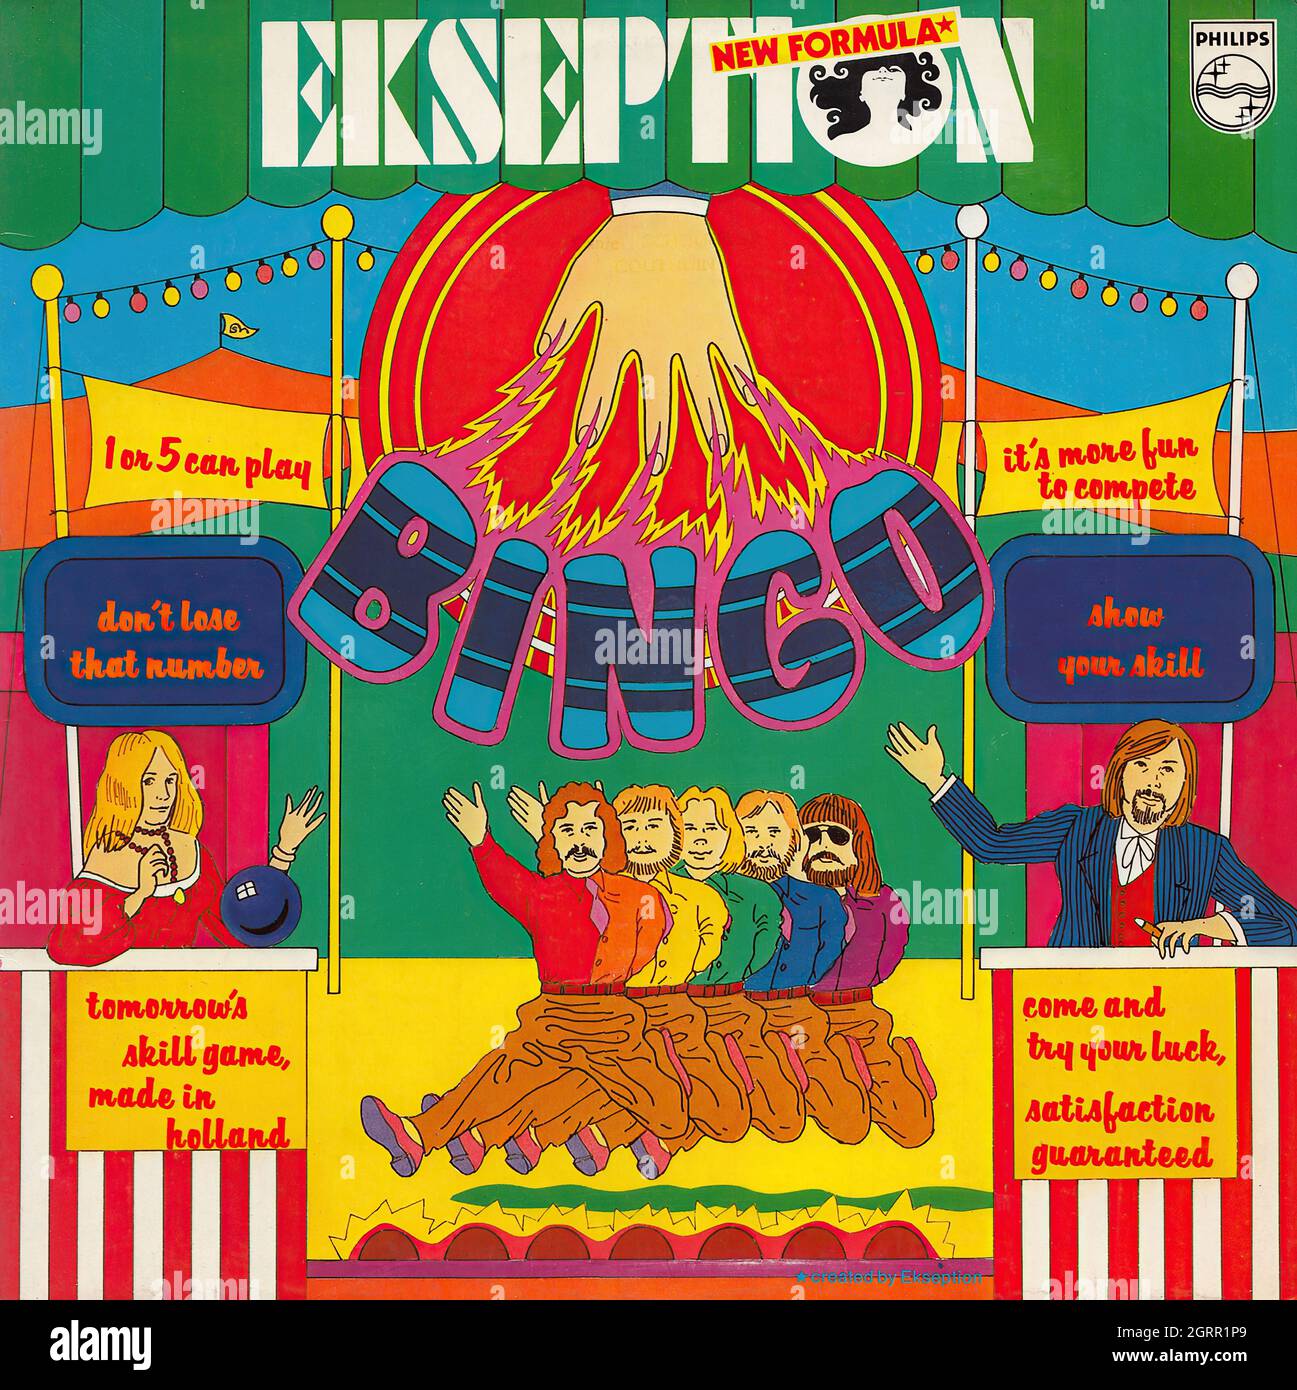 Ekseption - Bingo - Vintage Vinyl Record Cover Stock Photo